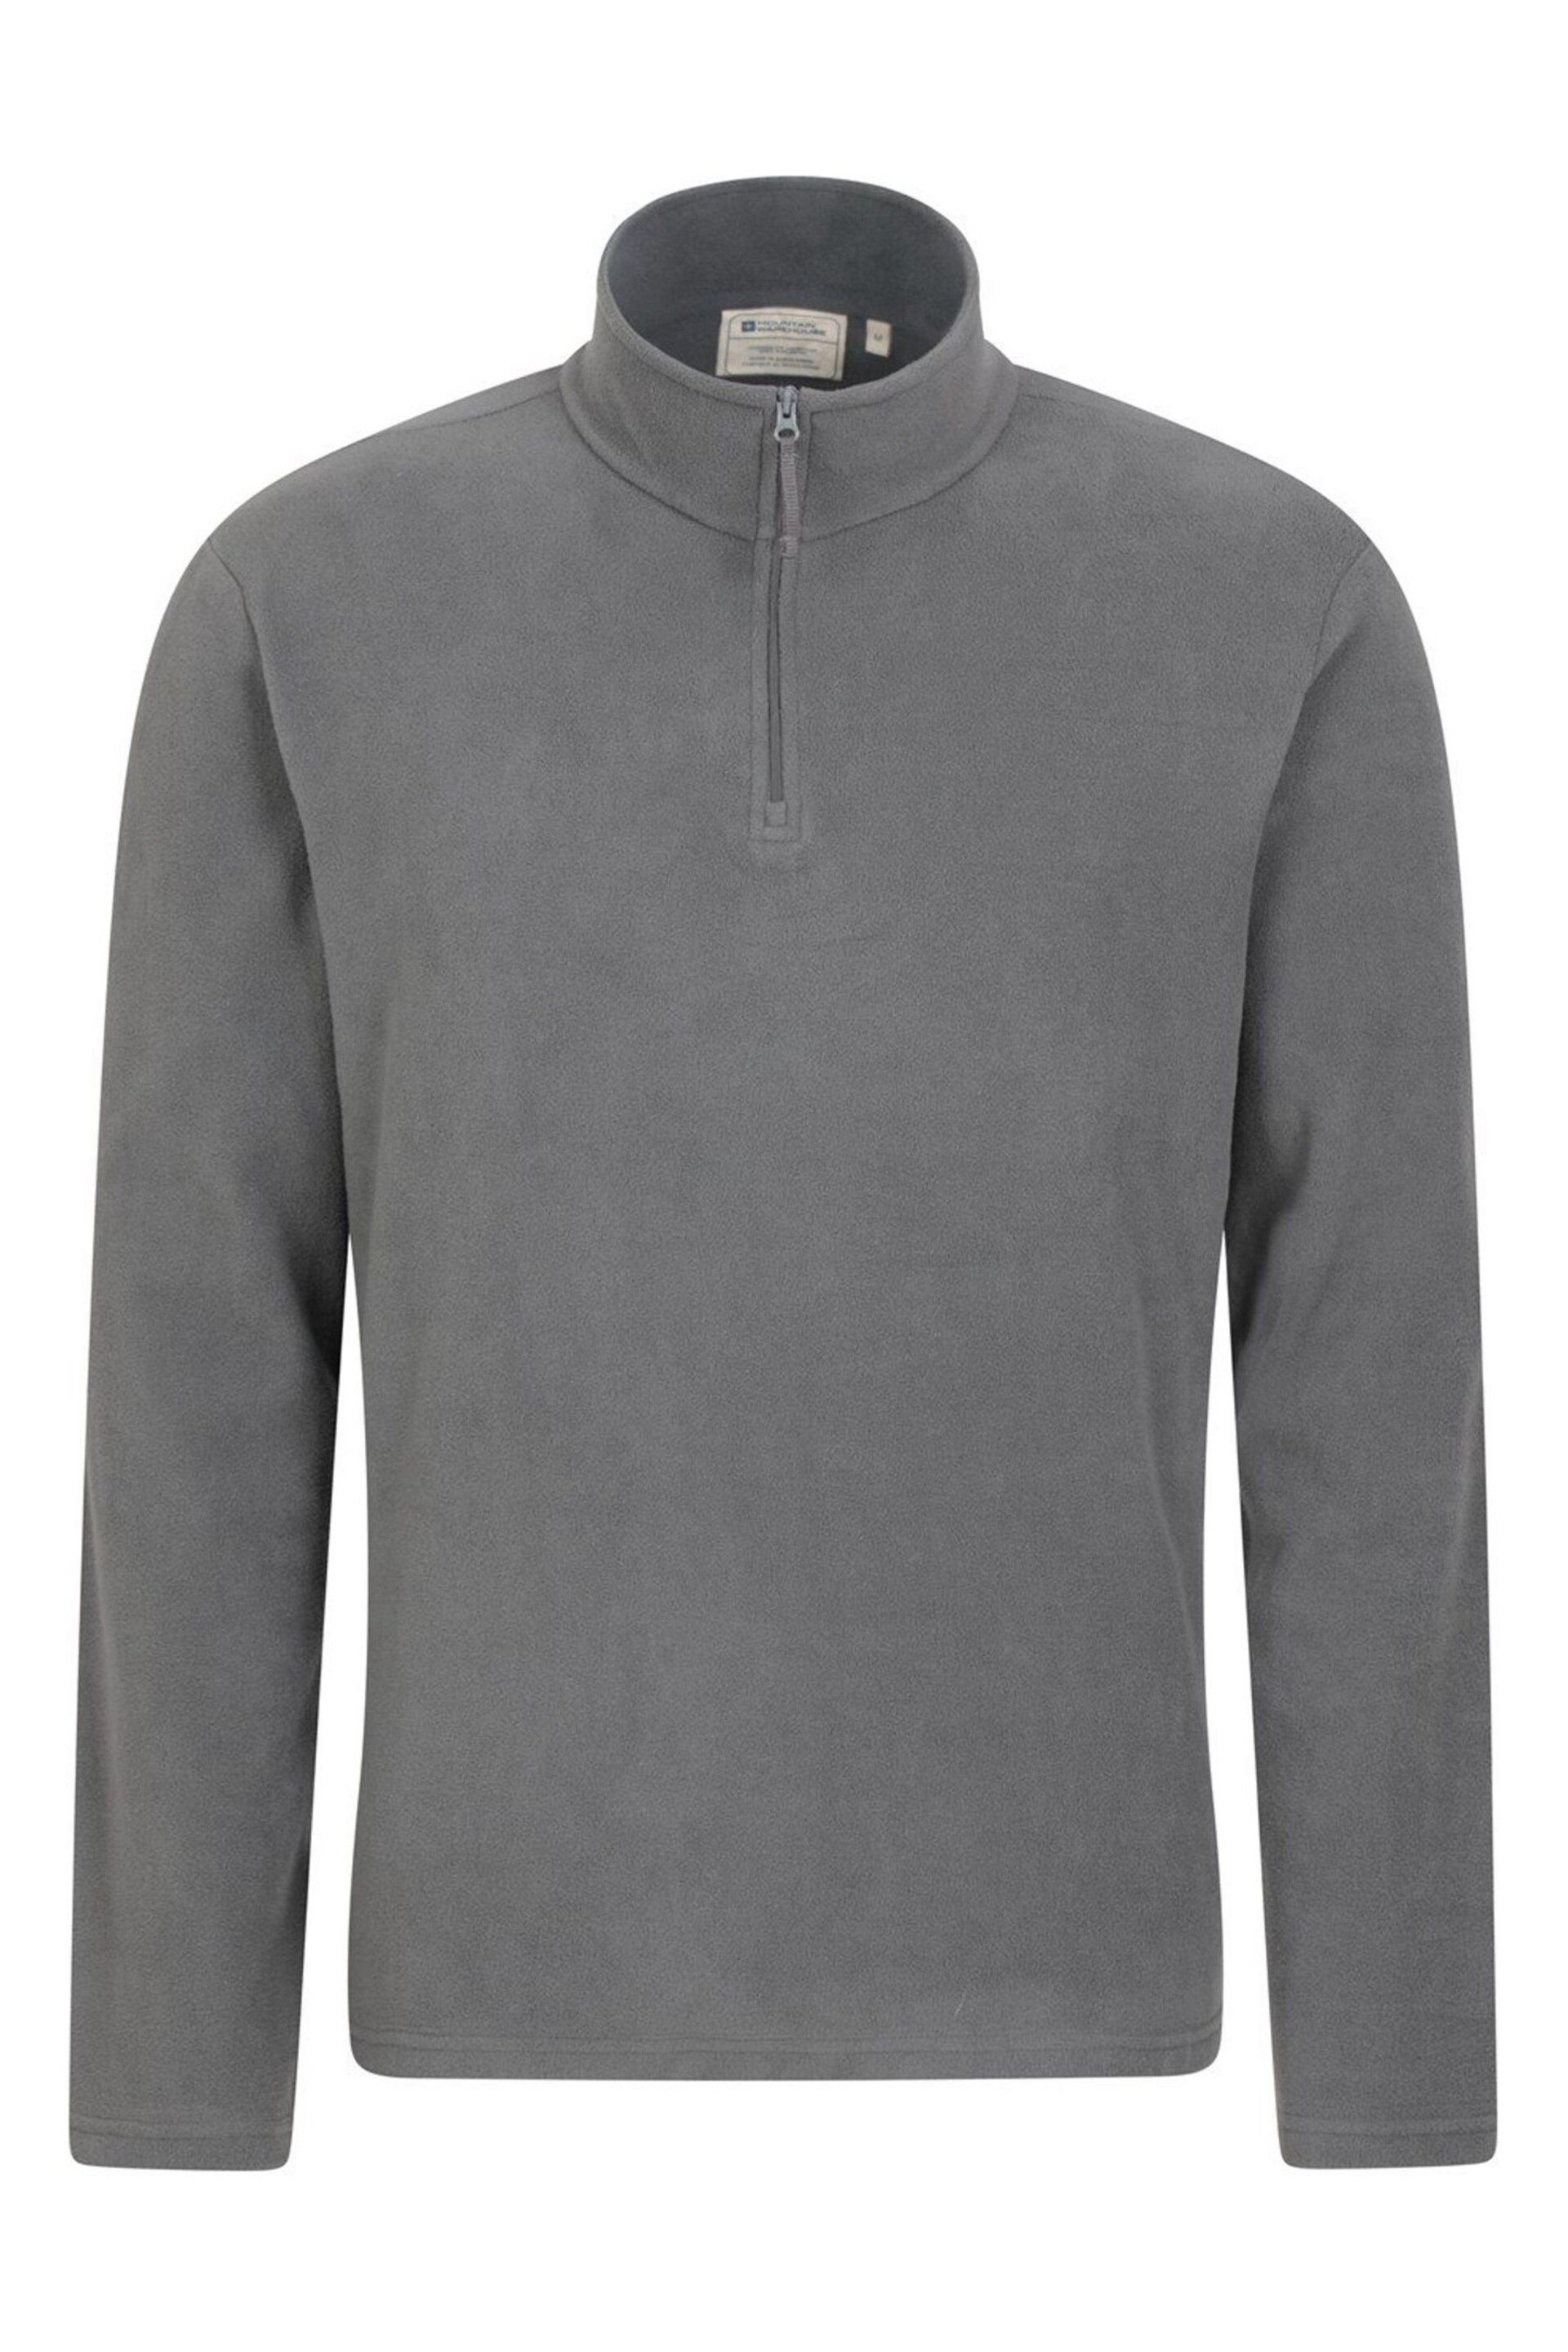 Mountain Warehouse Grey Camber Half-Zip Fleece - Mens - Image 1 of 2